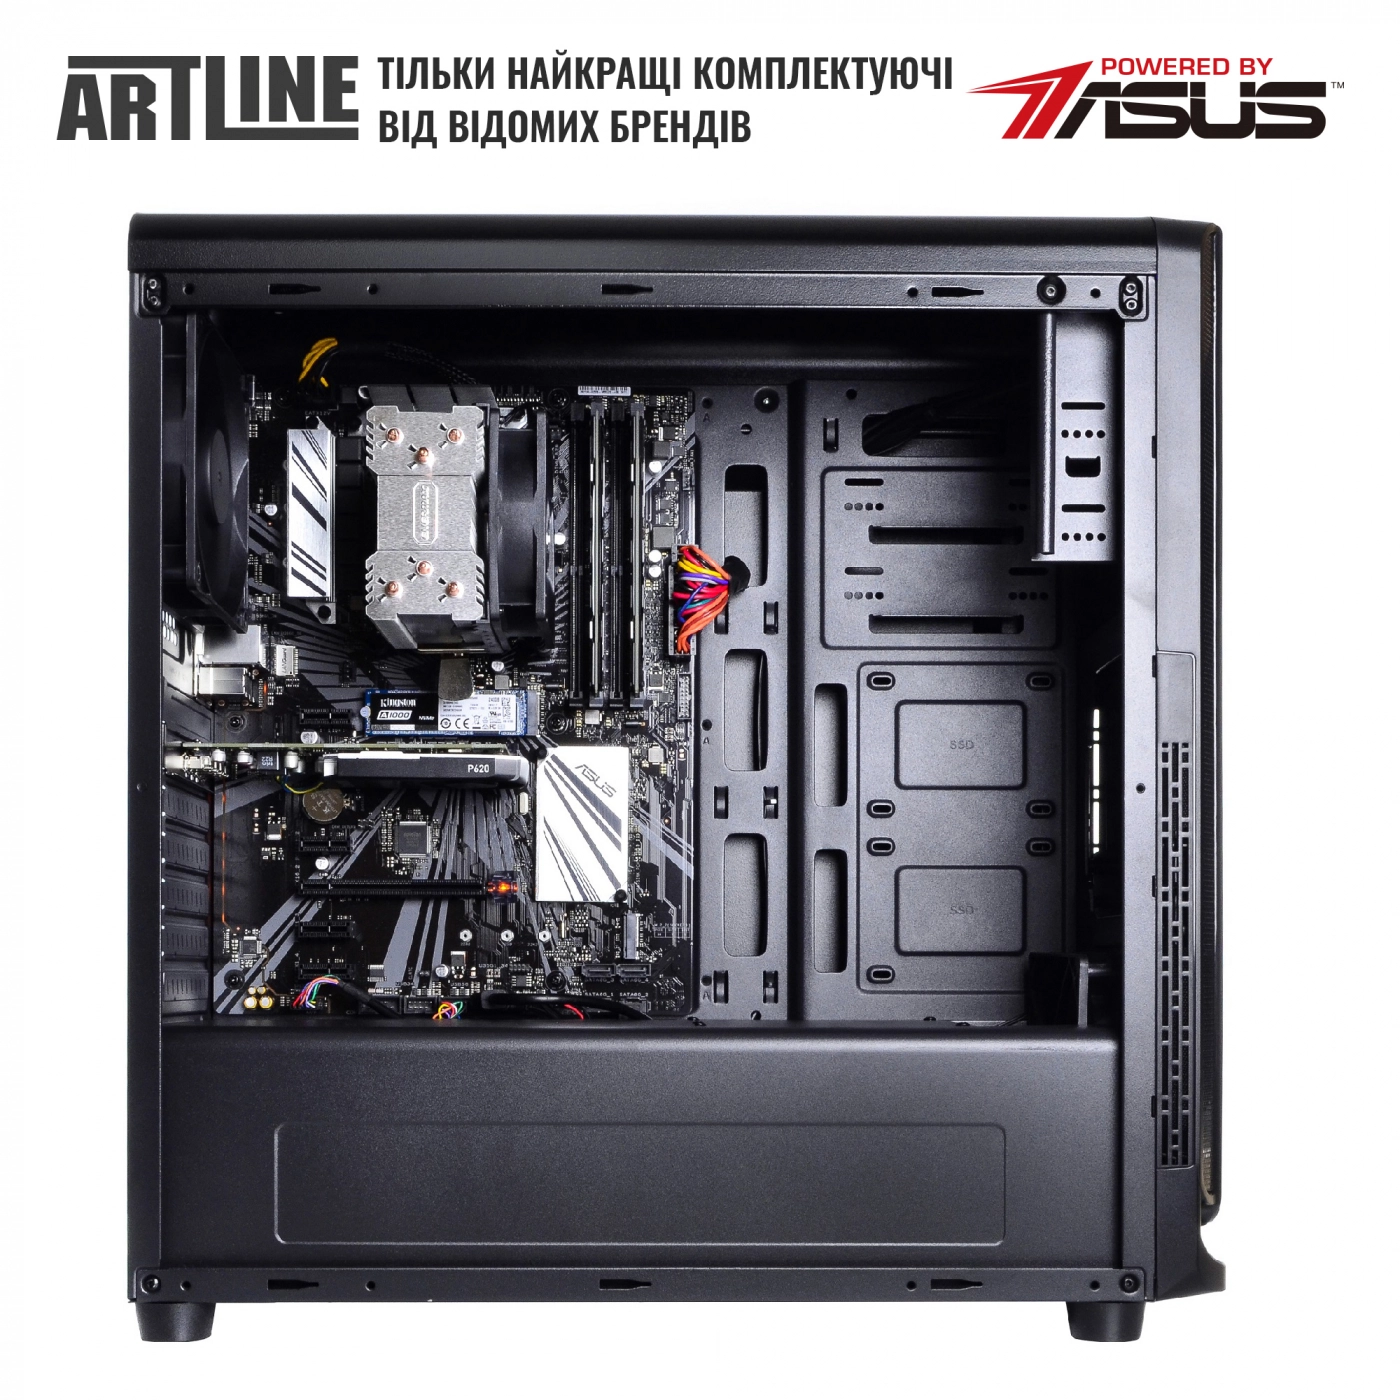 Купити Сервер ARTLINE Business T15v14 - фото 5